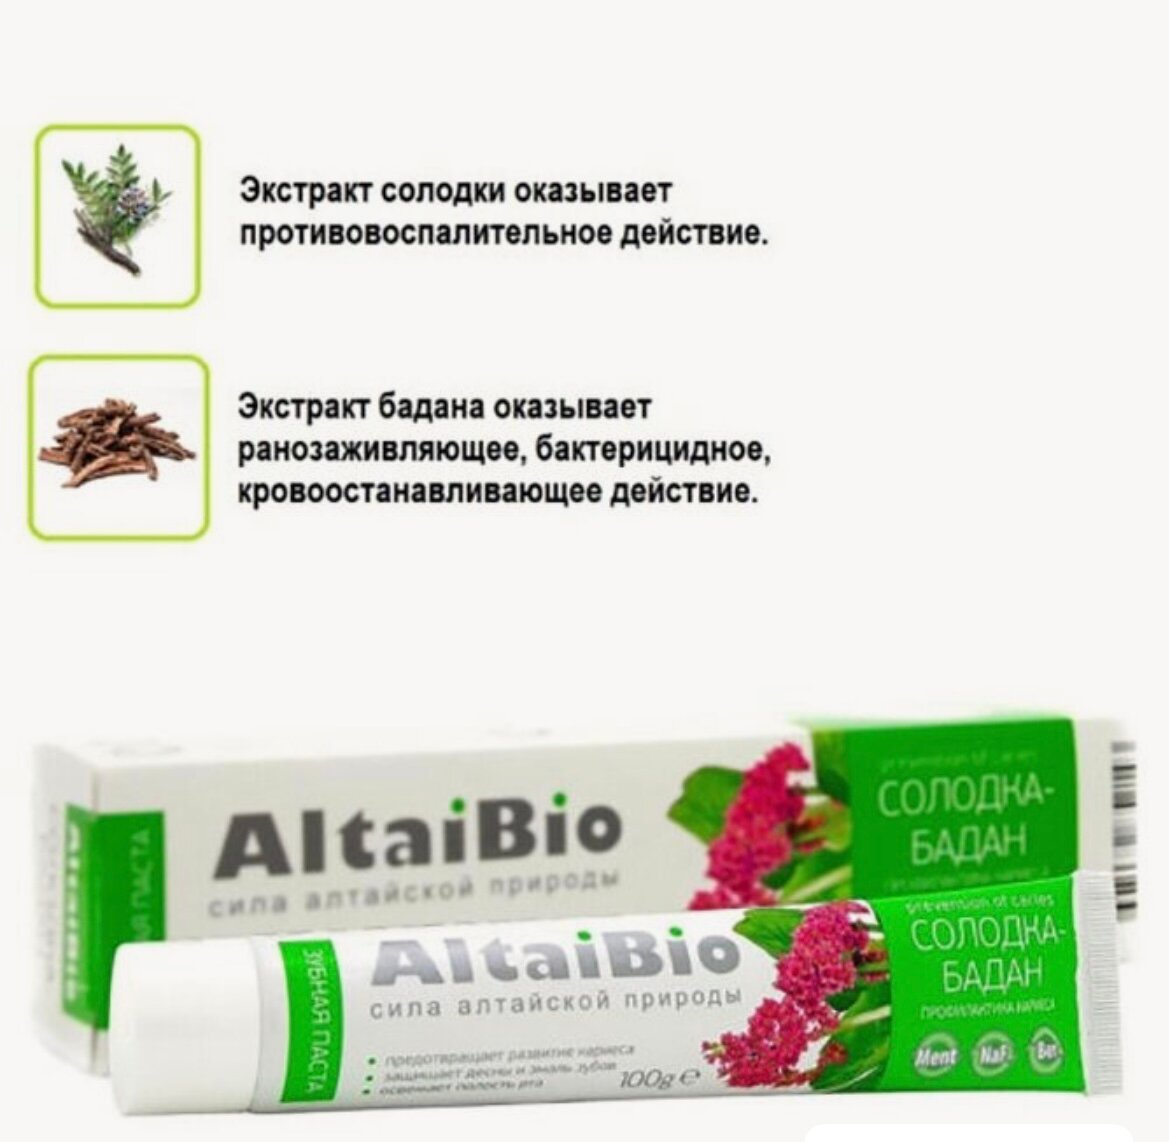 AltaiBio Зубная паста для профилактики кариеса "Солодка-бадан", 75 мл (AltaiBio, ) - фото №7